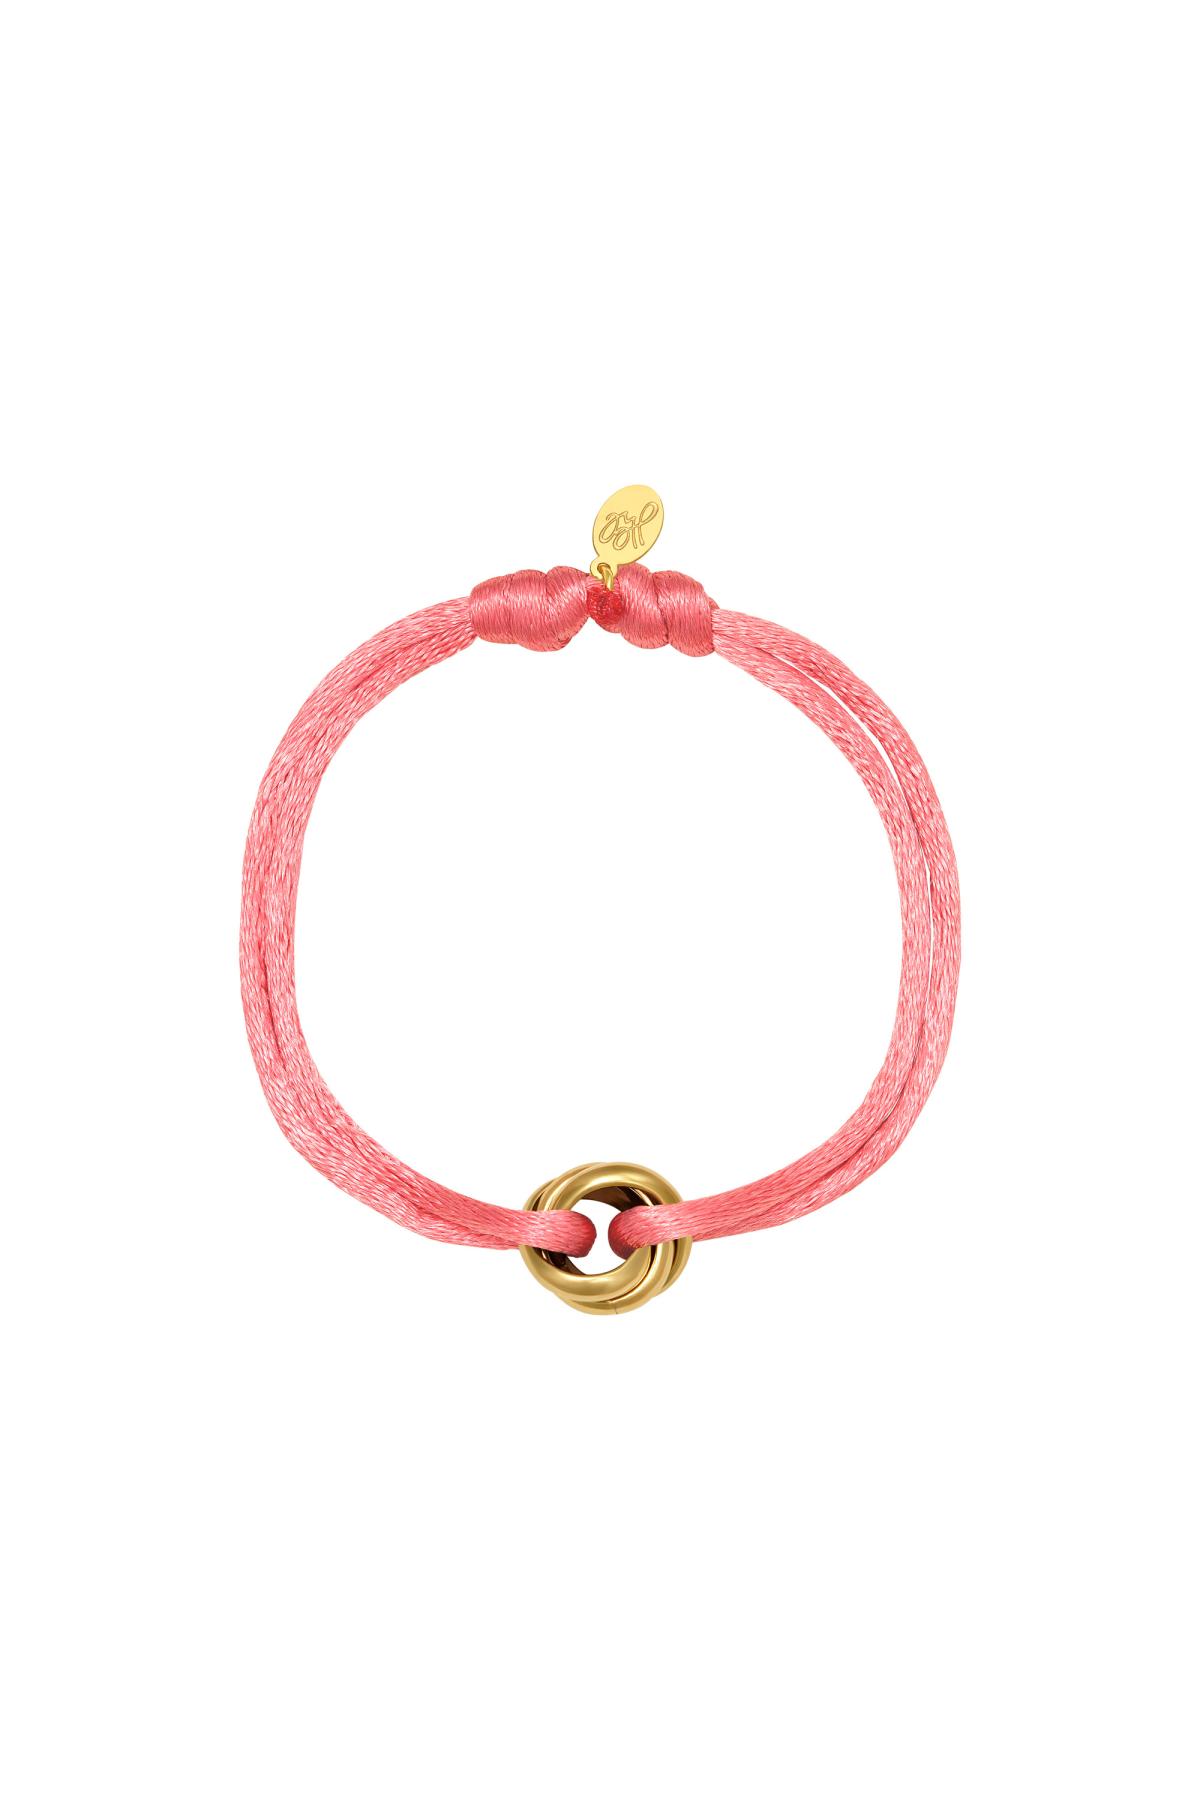 Bracelet Satin Knot Pink & Gold Stainless Steel h5 